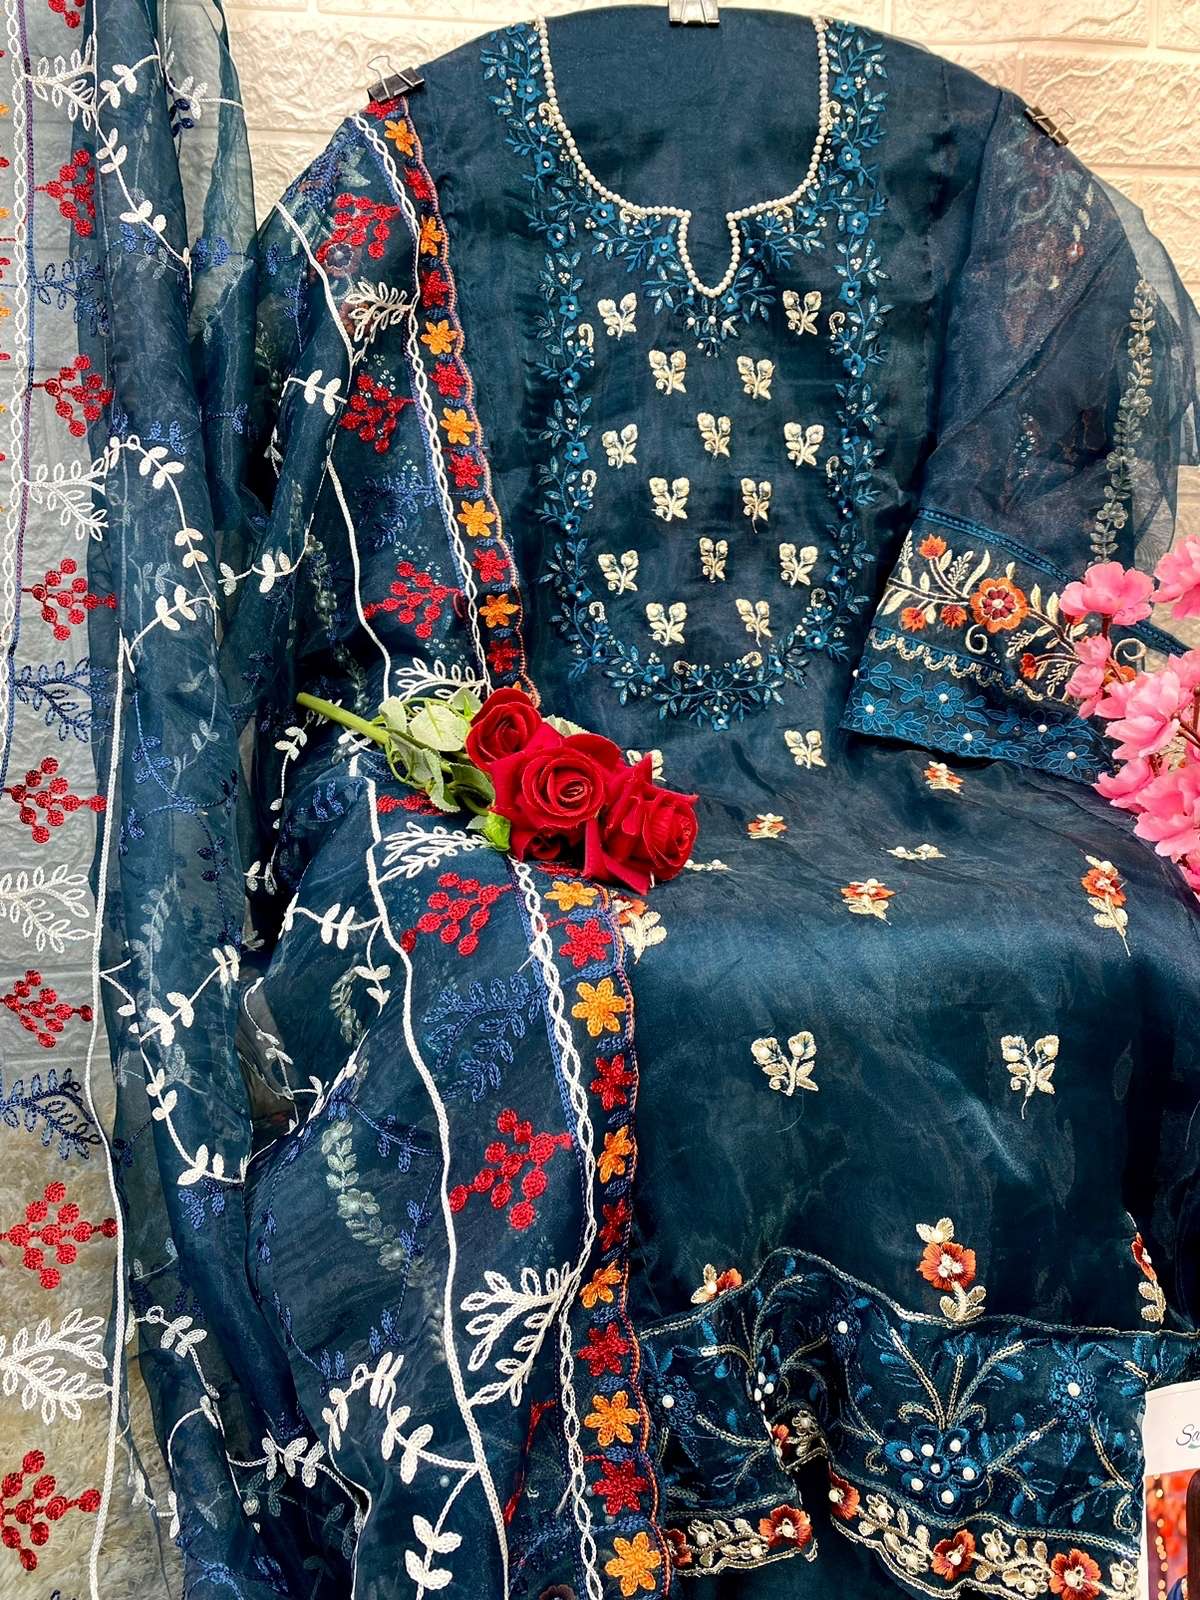 saniya trendz 2015 series trendy designer salwar suits latest collection